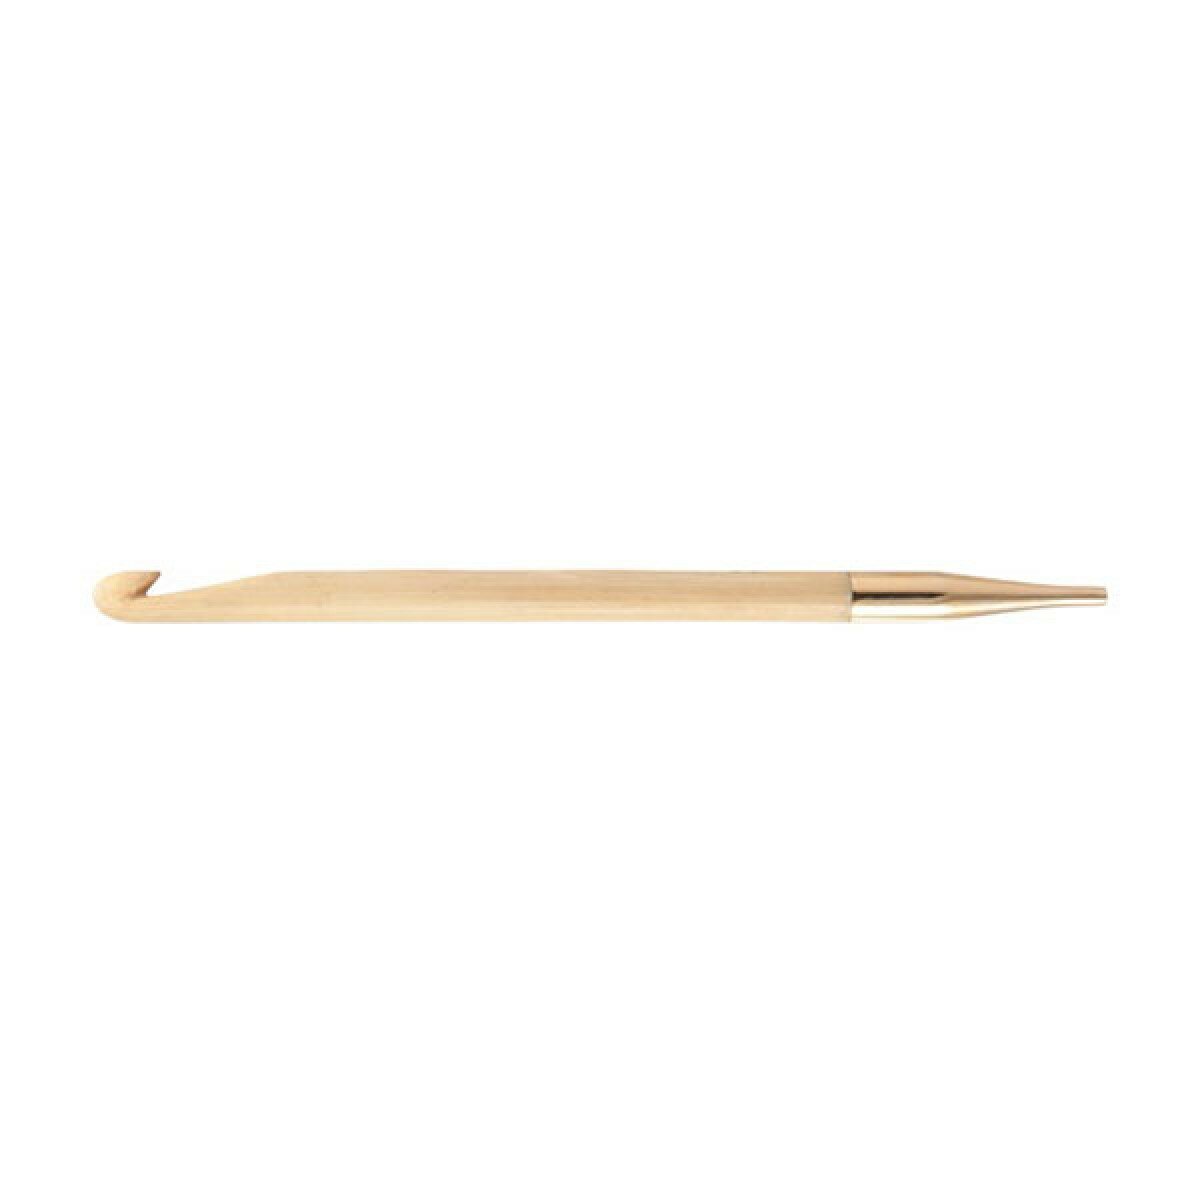 Крючок для вязания тунисский, съемный Bamboo 3мм, KnitPro, 22521